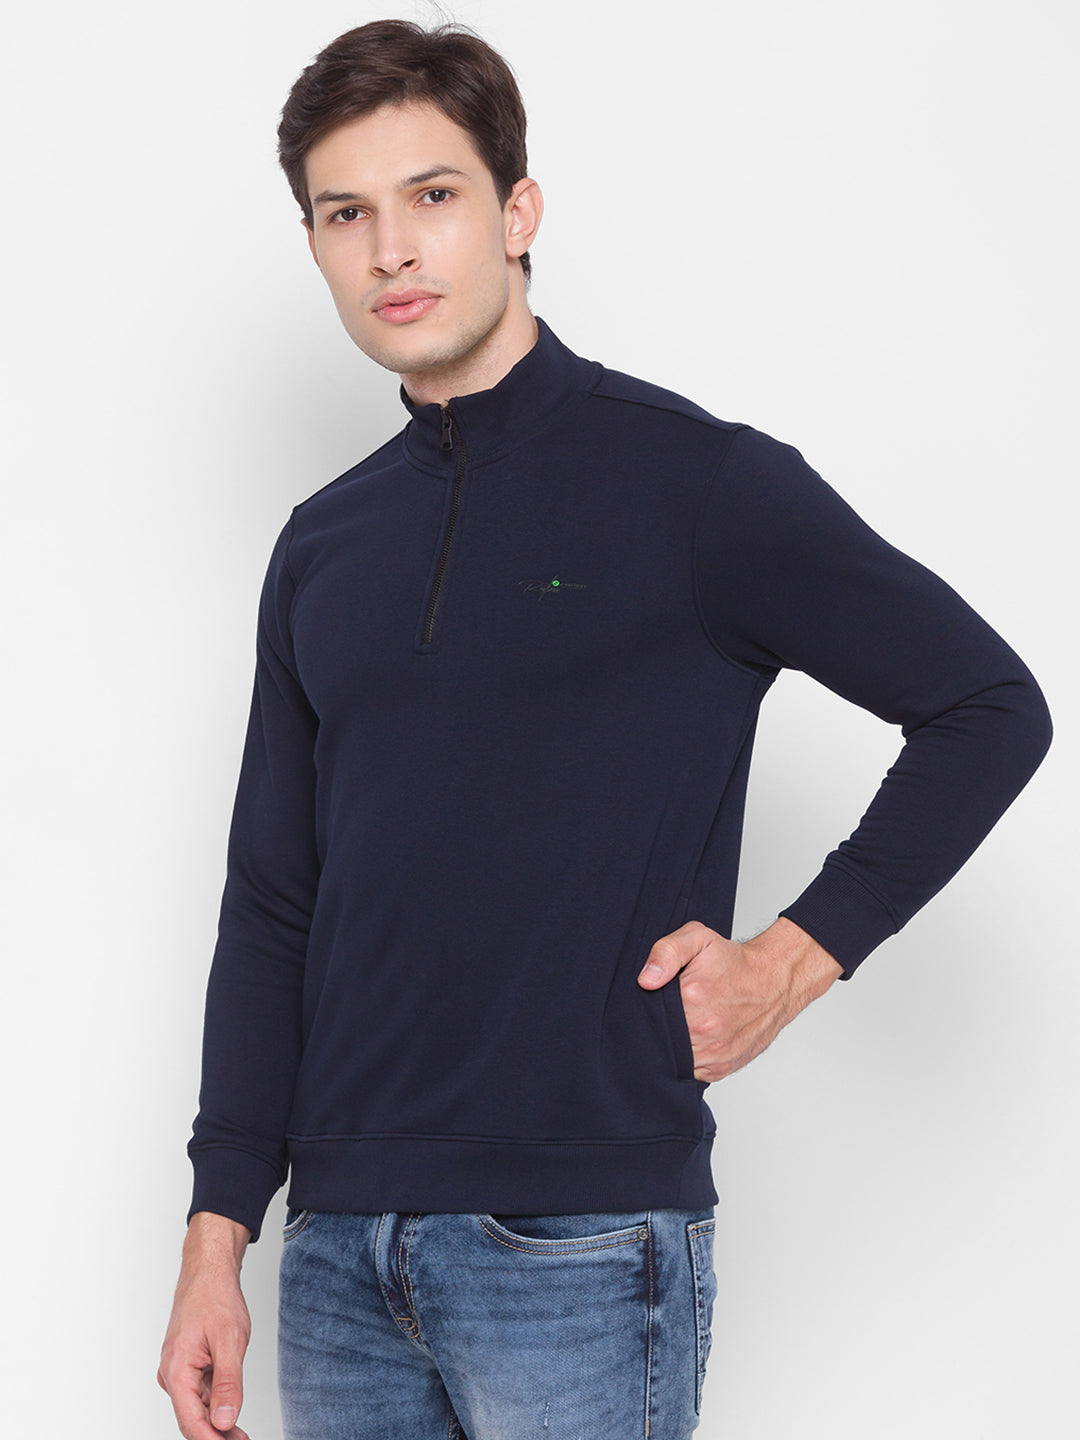 Spykar Blue Cotton Sweatshirt For Men